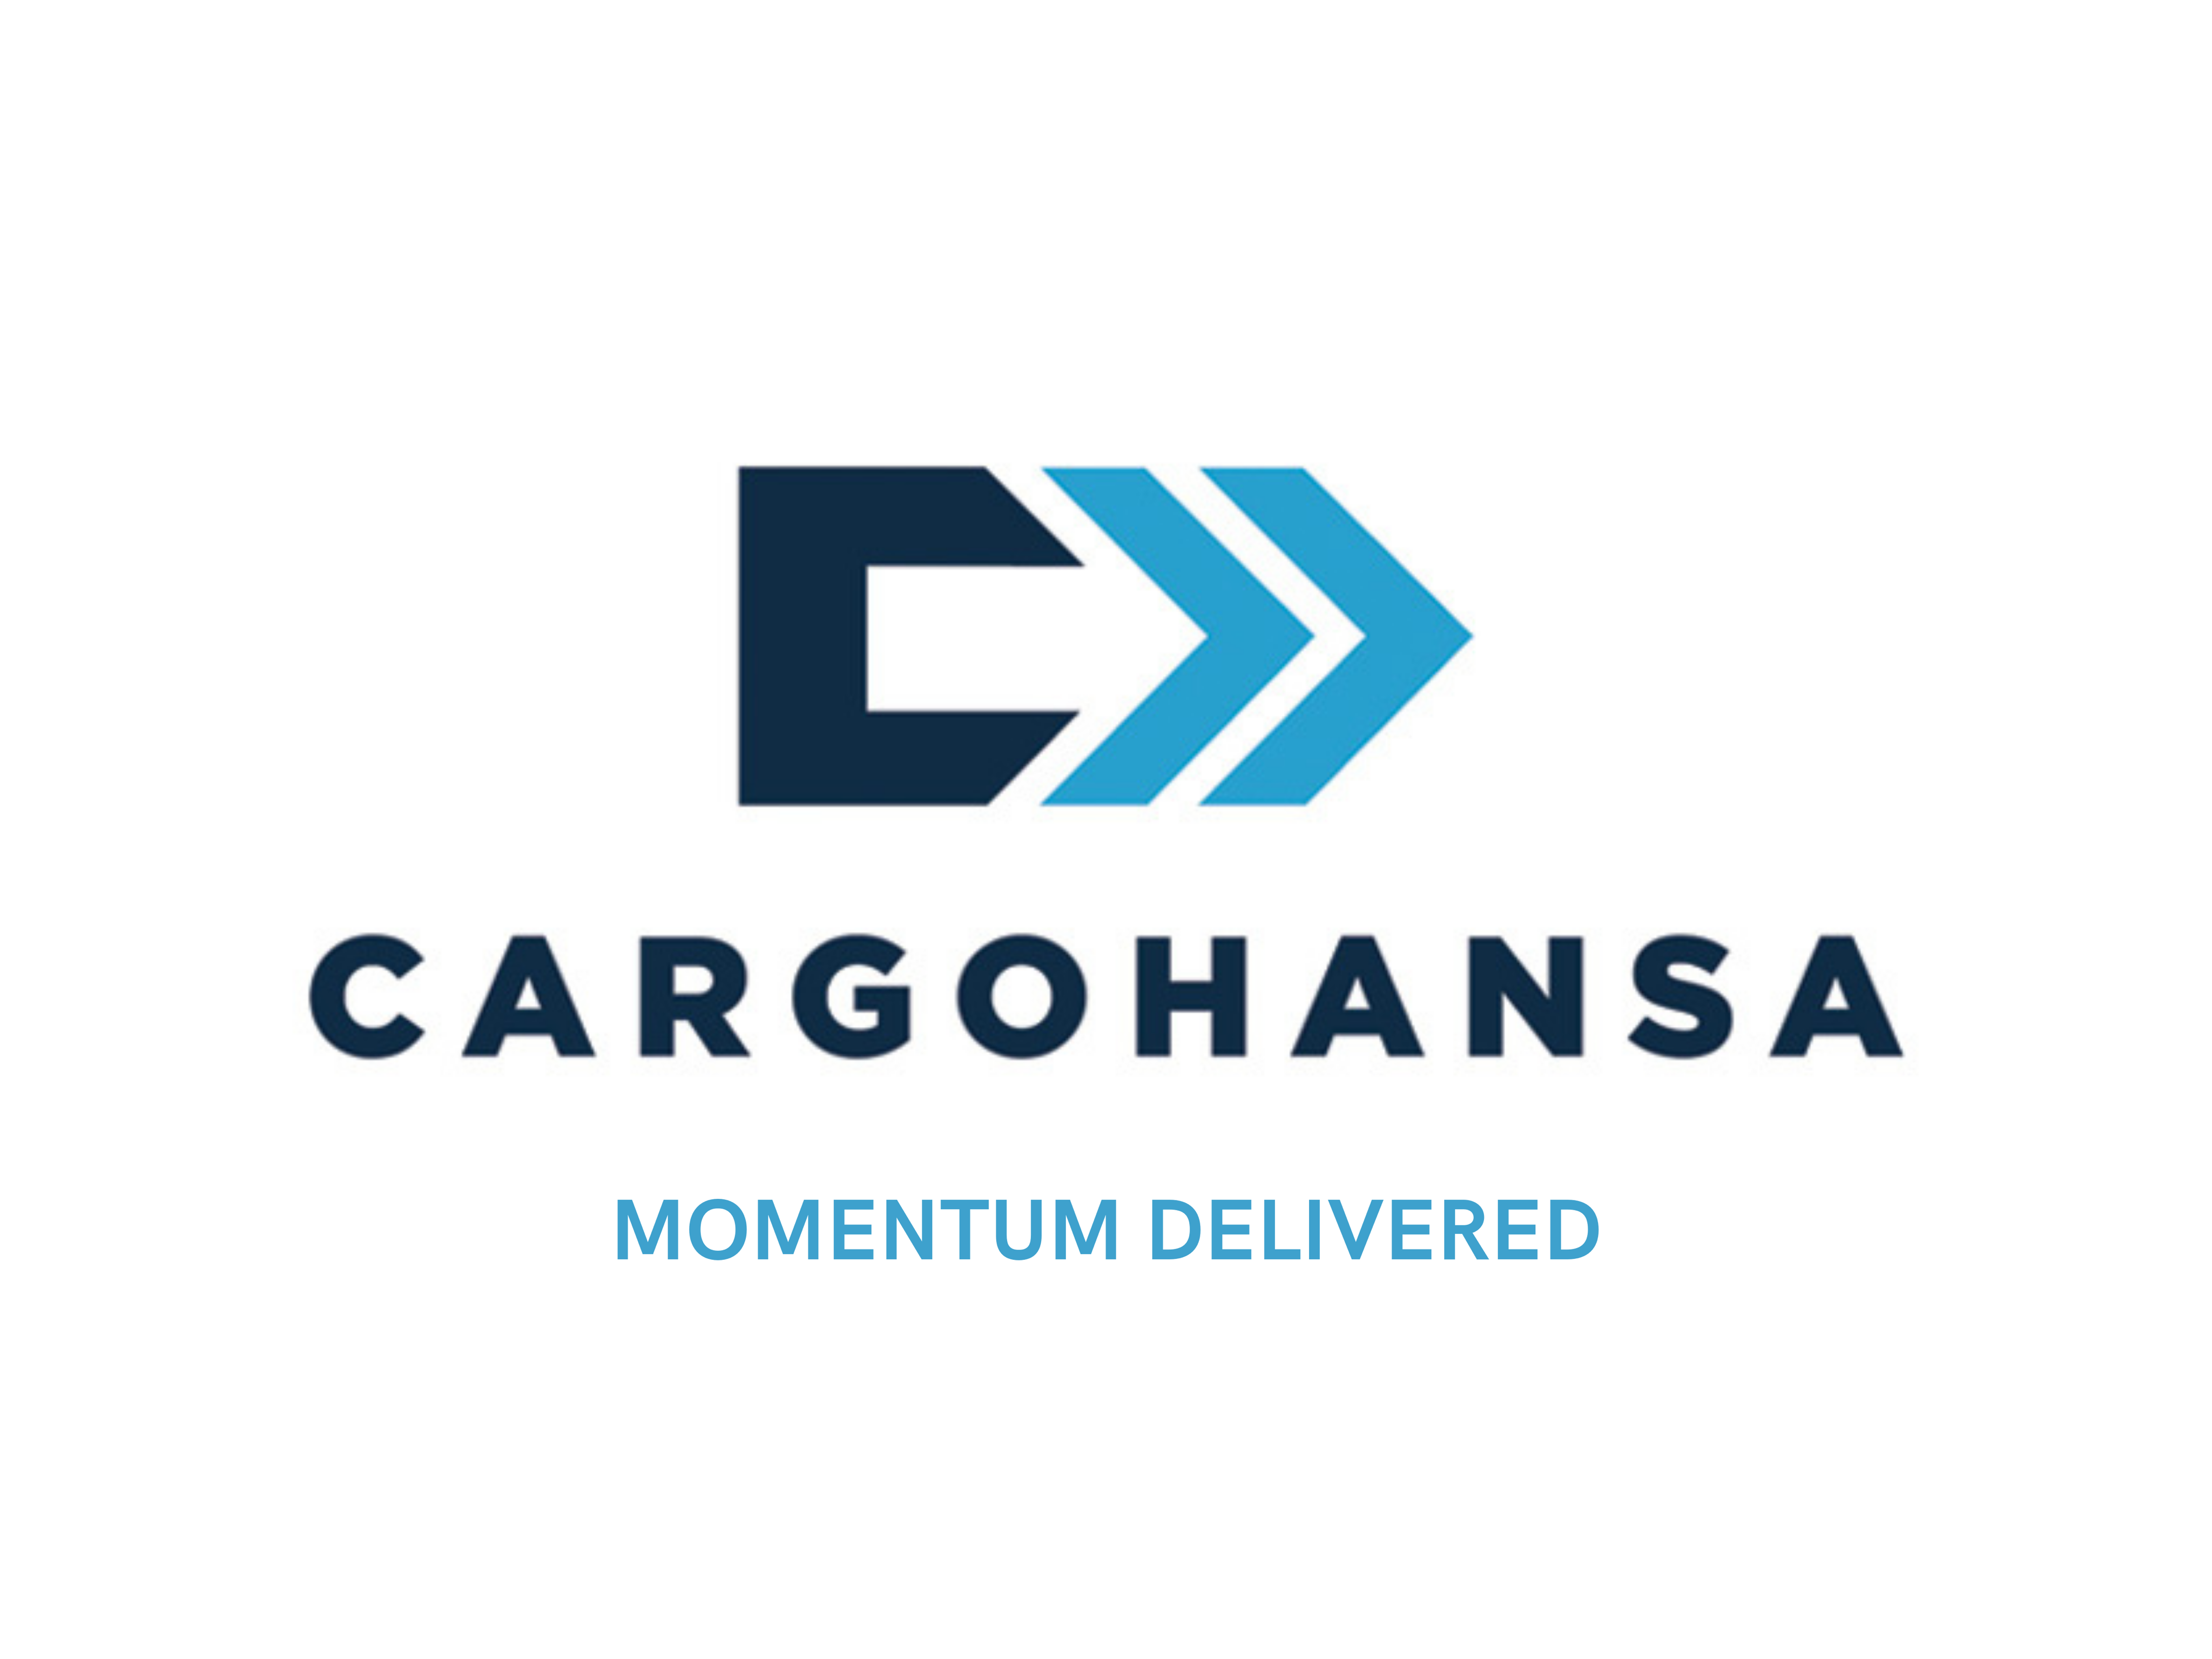 Cargohansa Logo & Momentum Delivered